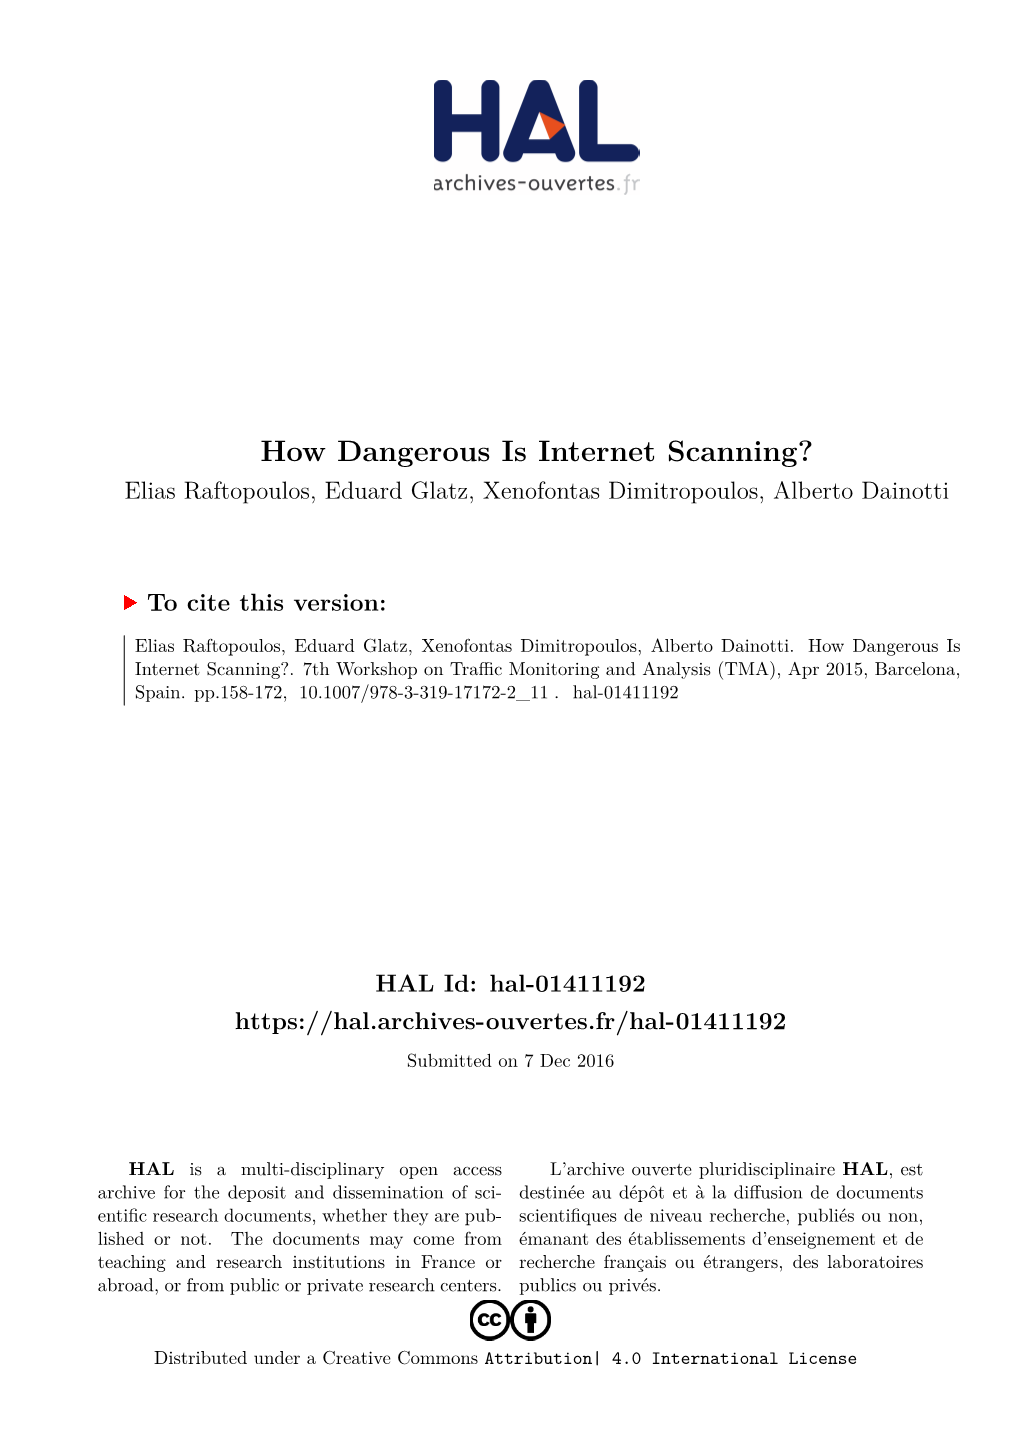 How Dangerous Is Internet Scanning? Elias Raftopoulos, Eduard Glatz, Xenofontas Dimitropoulos, Alberto Dainotti